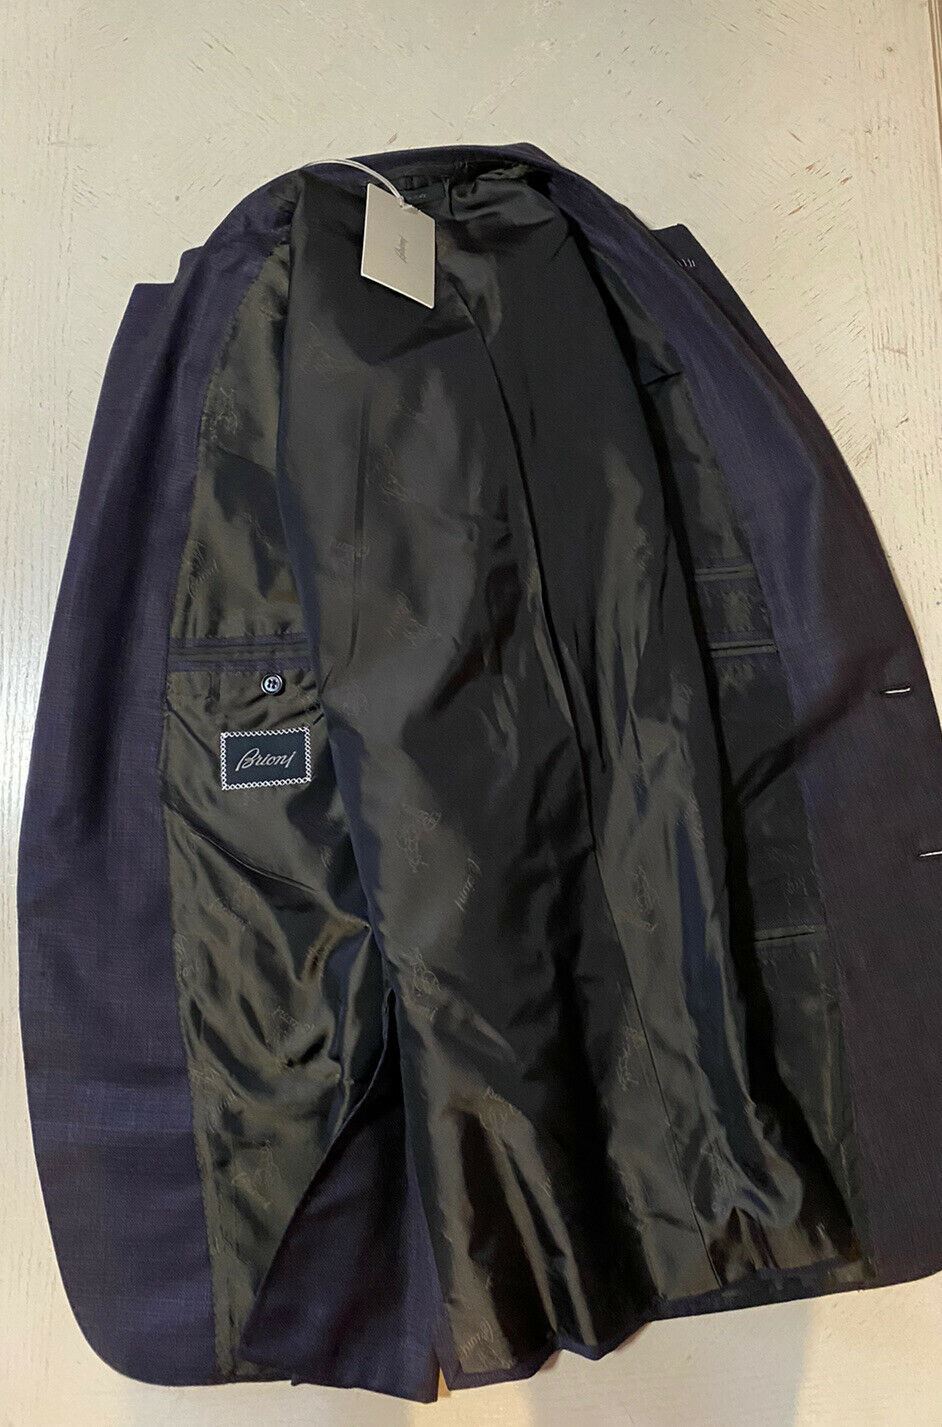 NWT $4400 Brioni Men’s Wool Sport Coat Blazer Jacket Burgundy 44R US/54R Eu